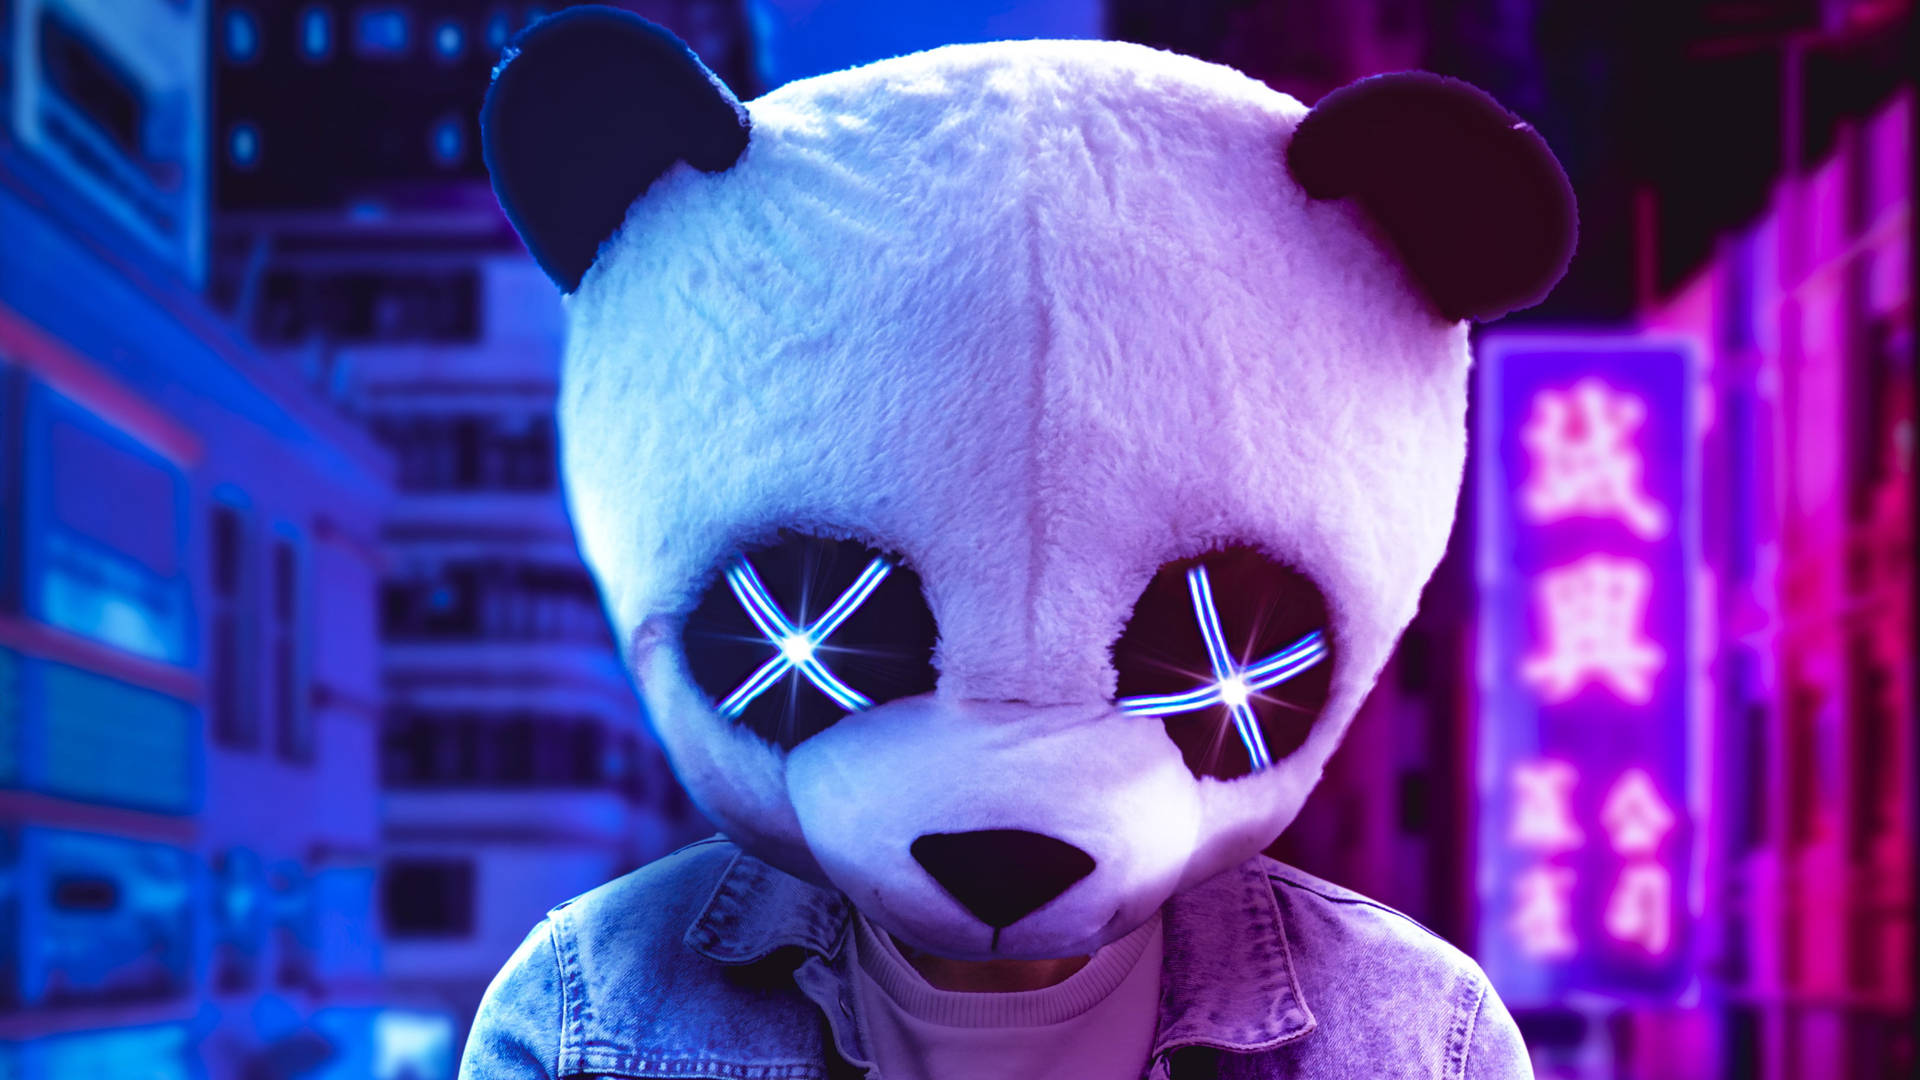 Neon Aesthetic Man With Panda Mask Background